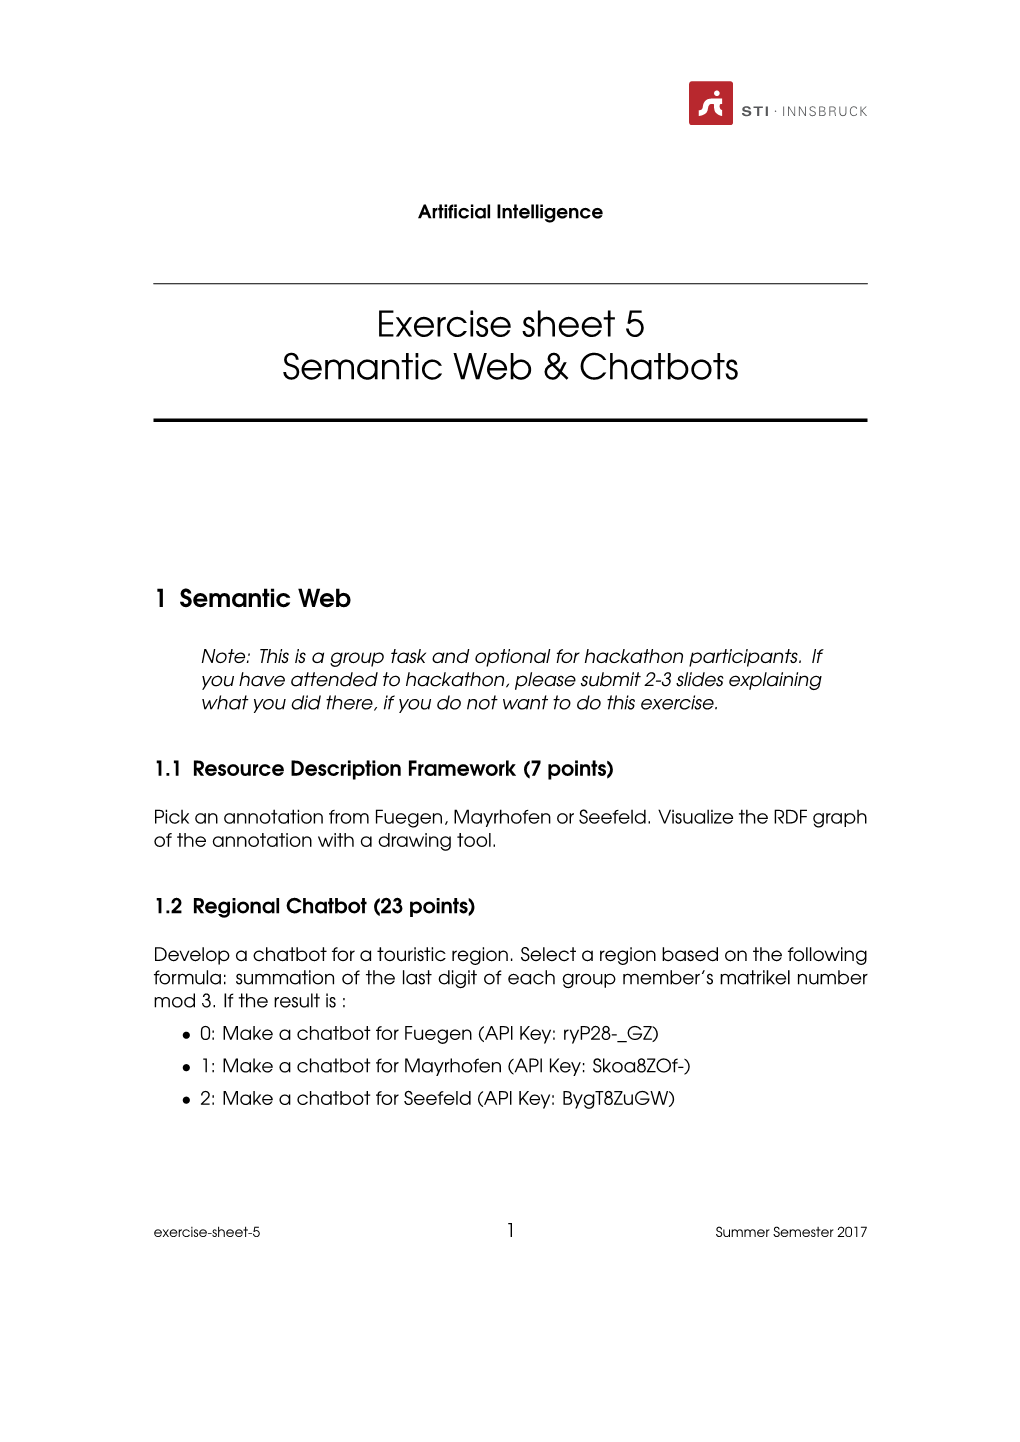 Exercise Sheet 5 Semantic Web & Chatbots